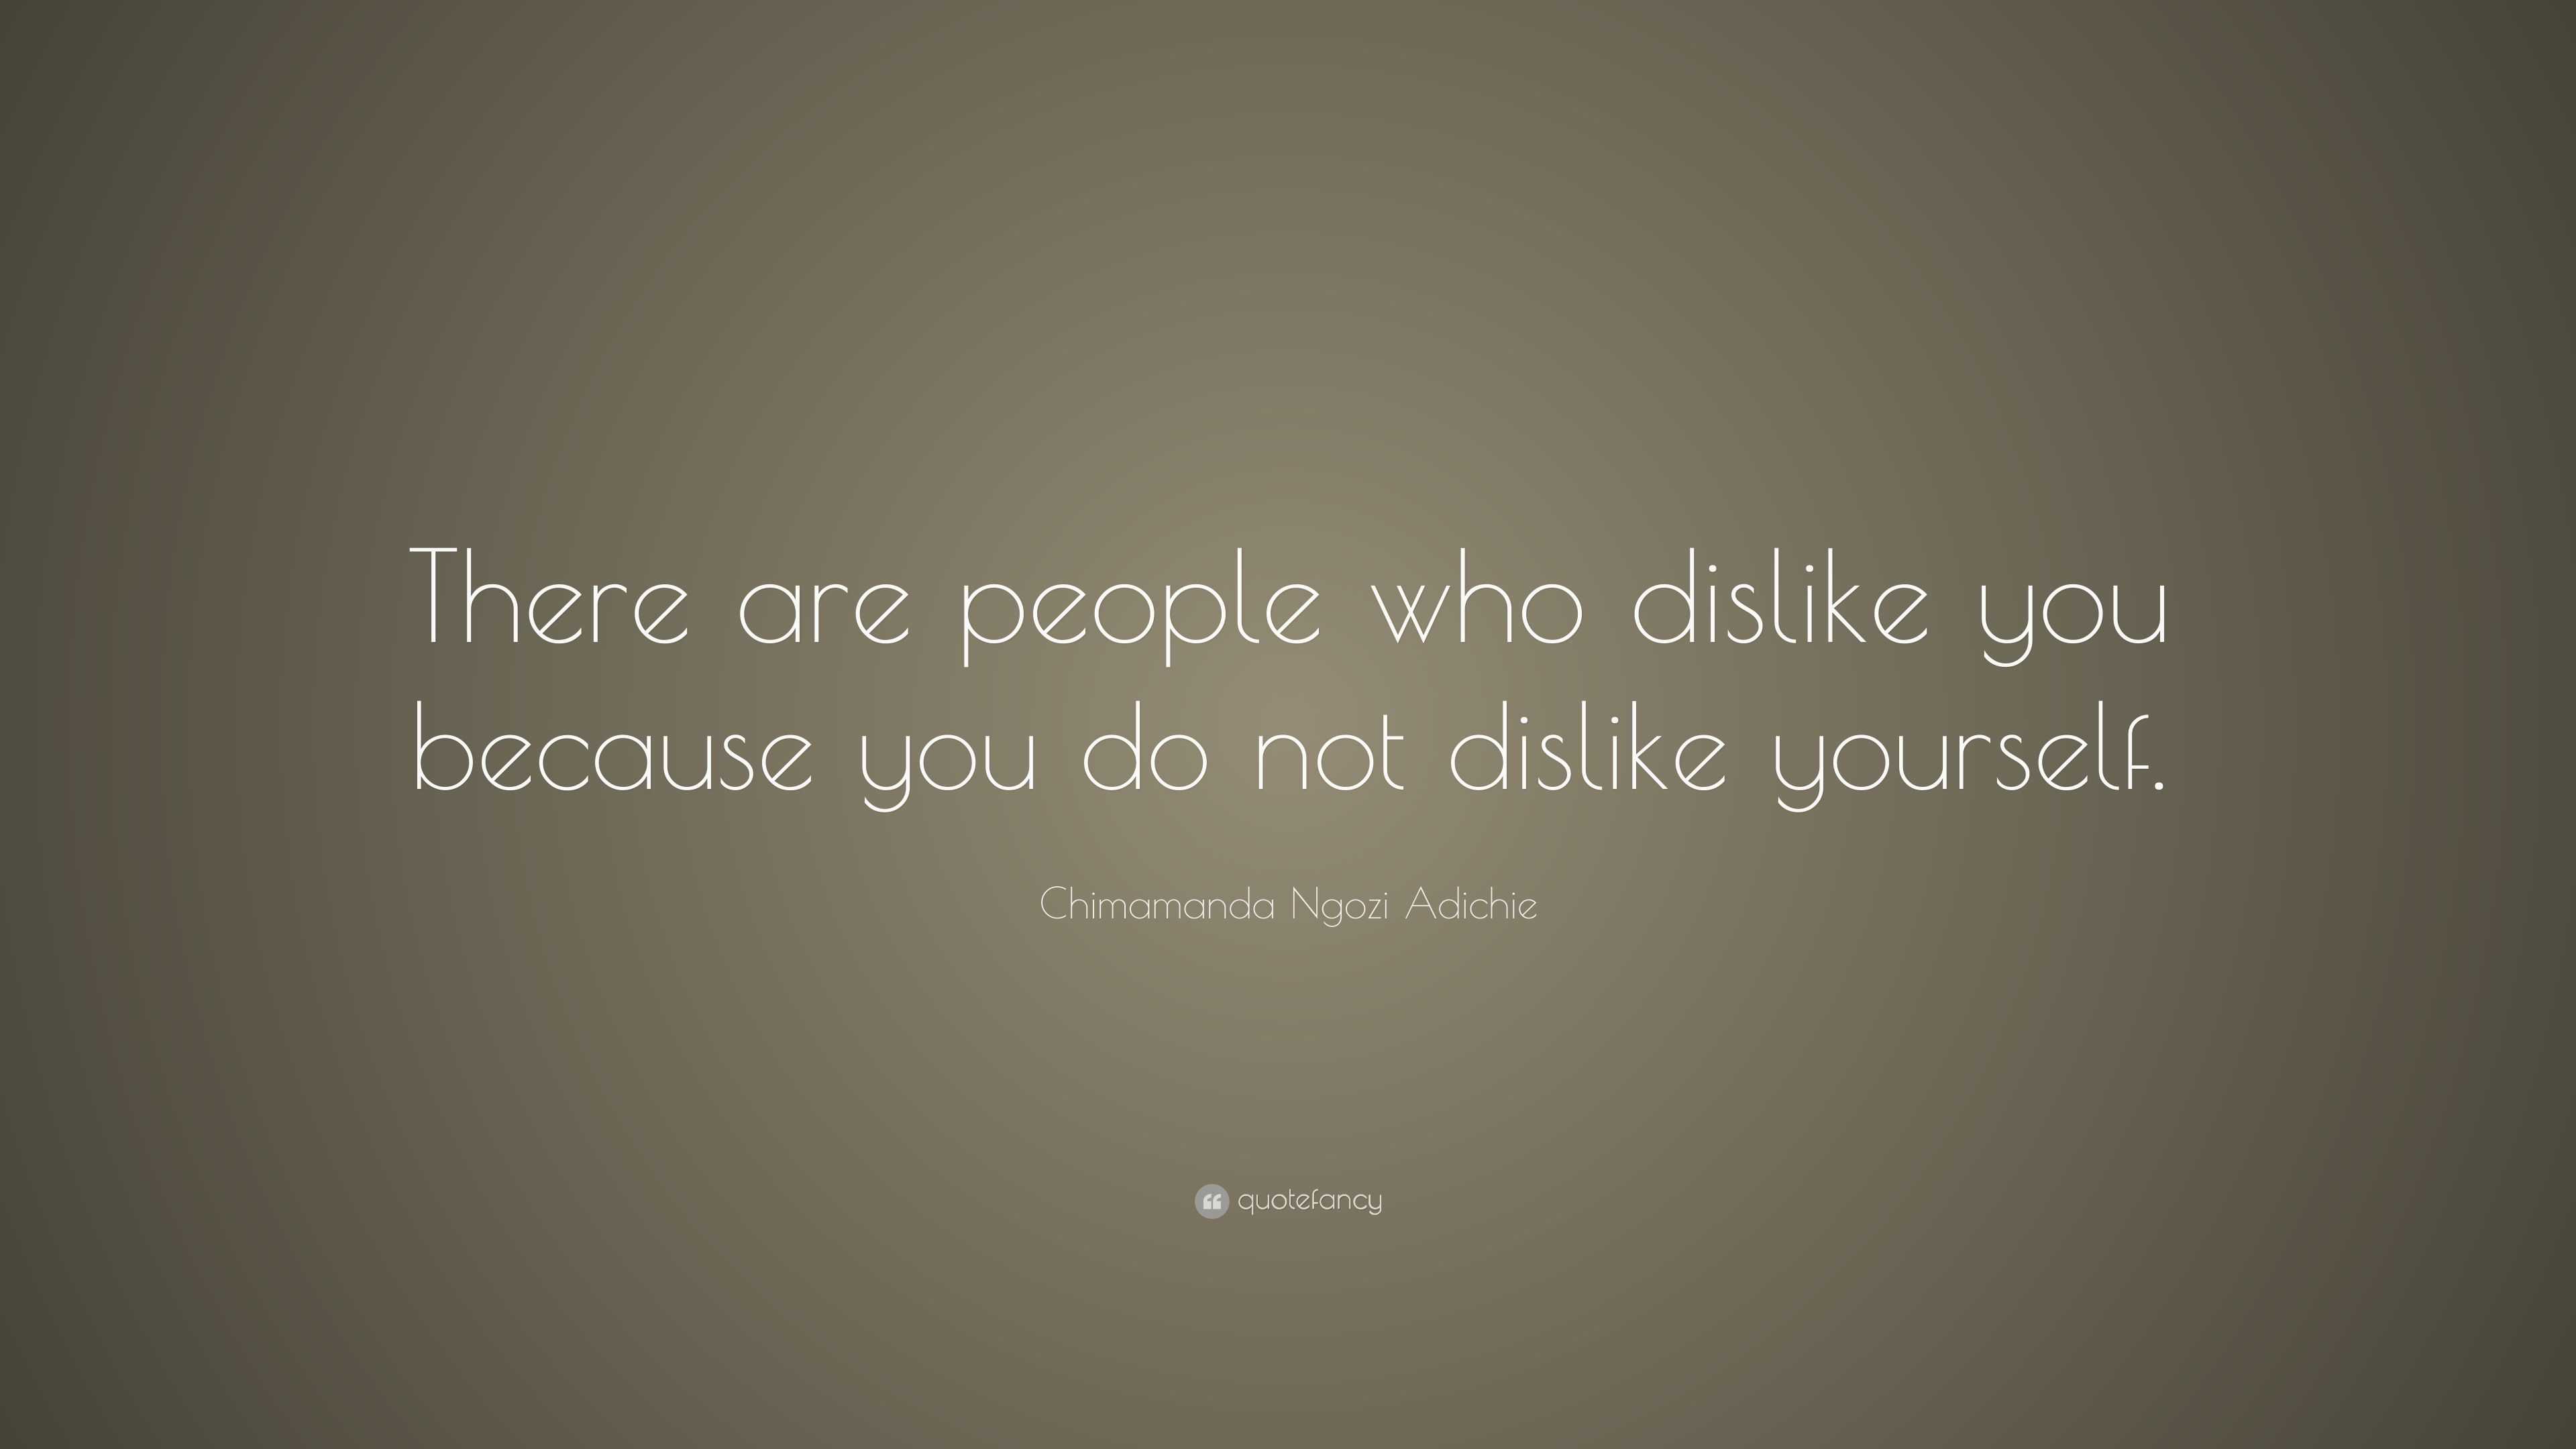 Chimamanda Ngozi Adichie Quote: “There are people who dislike you ...